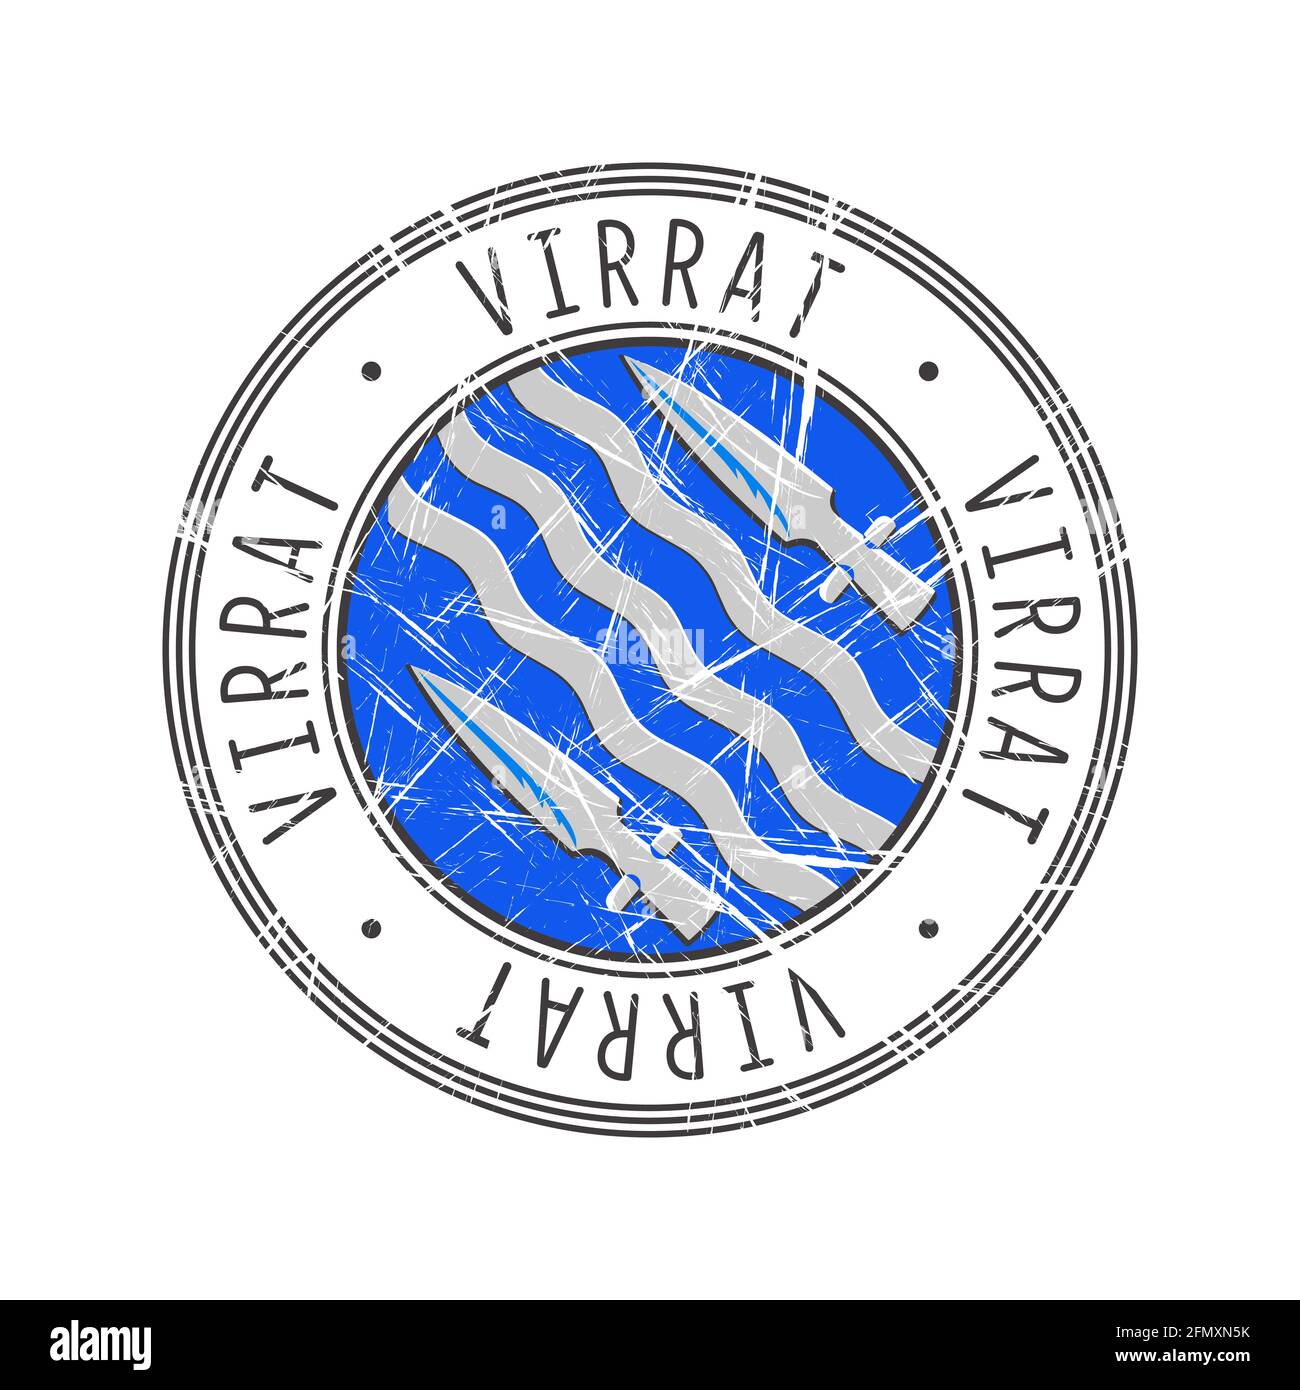 Virrat city, Finland. Grunge postal rubber stamp over white background Stock Vector